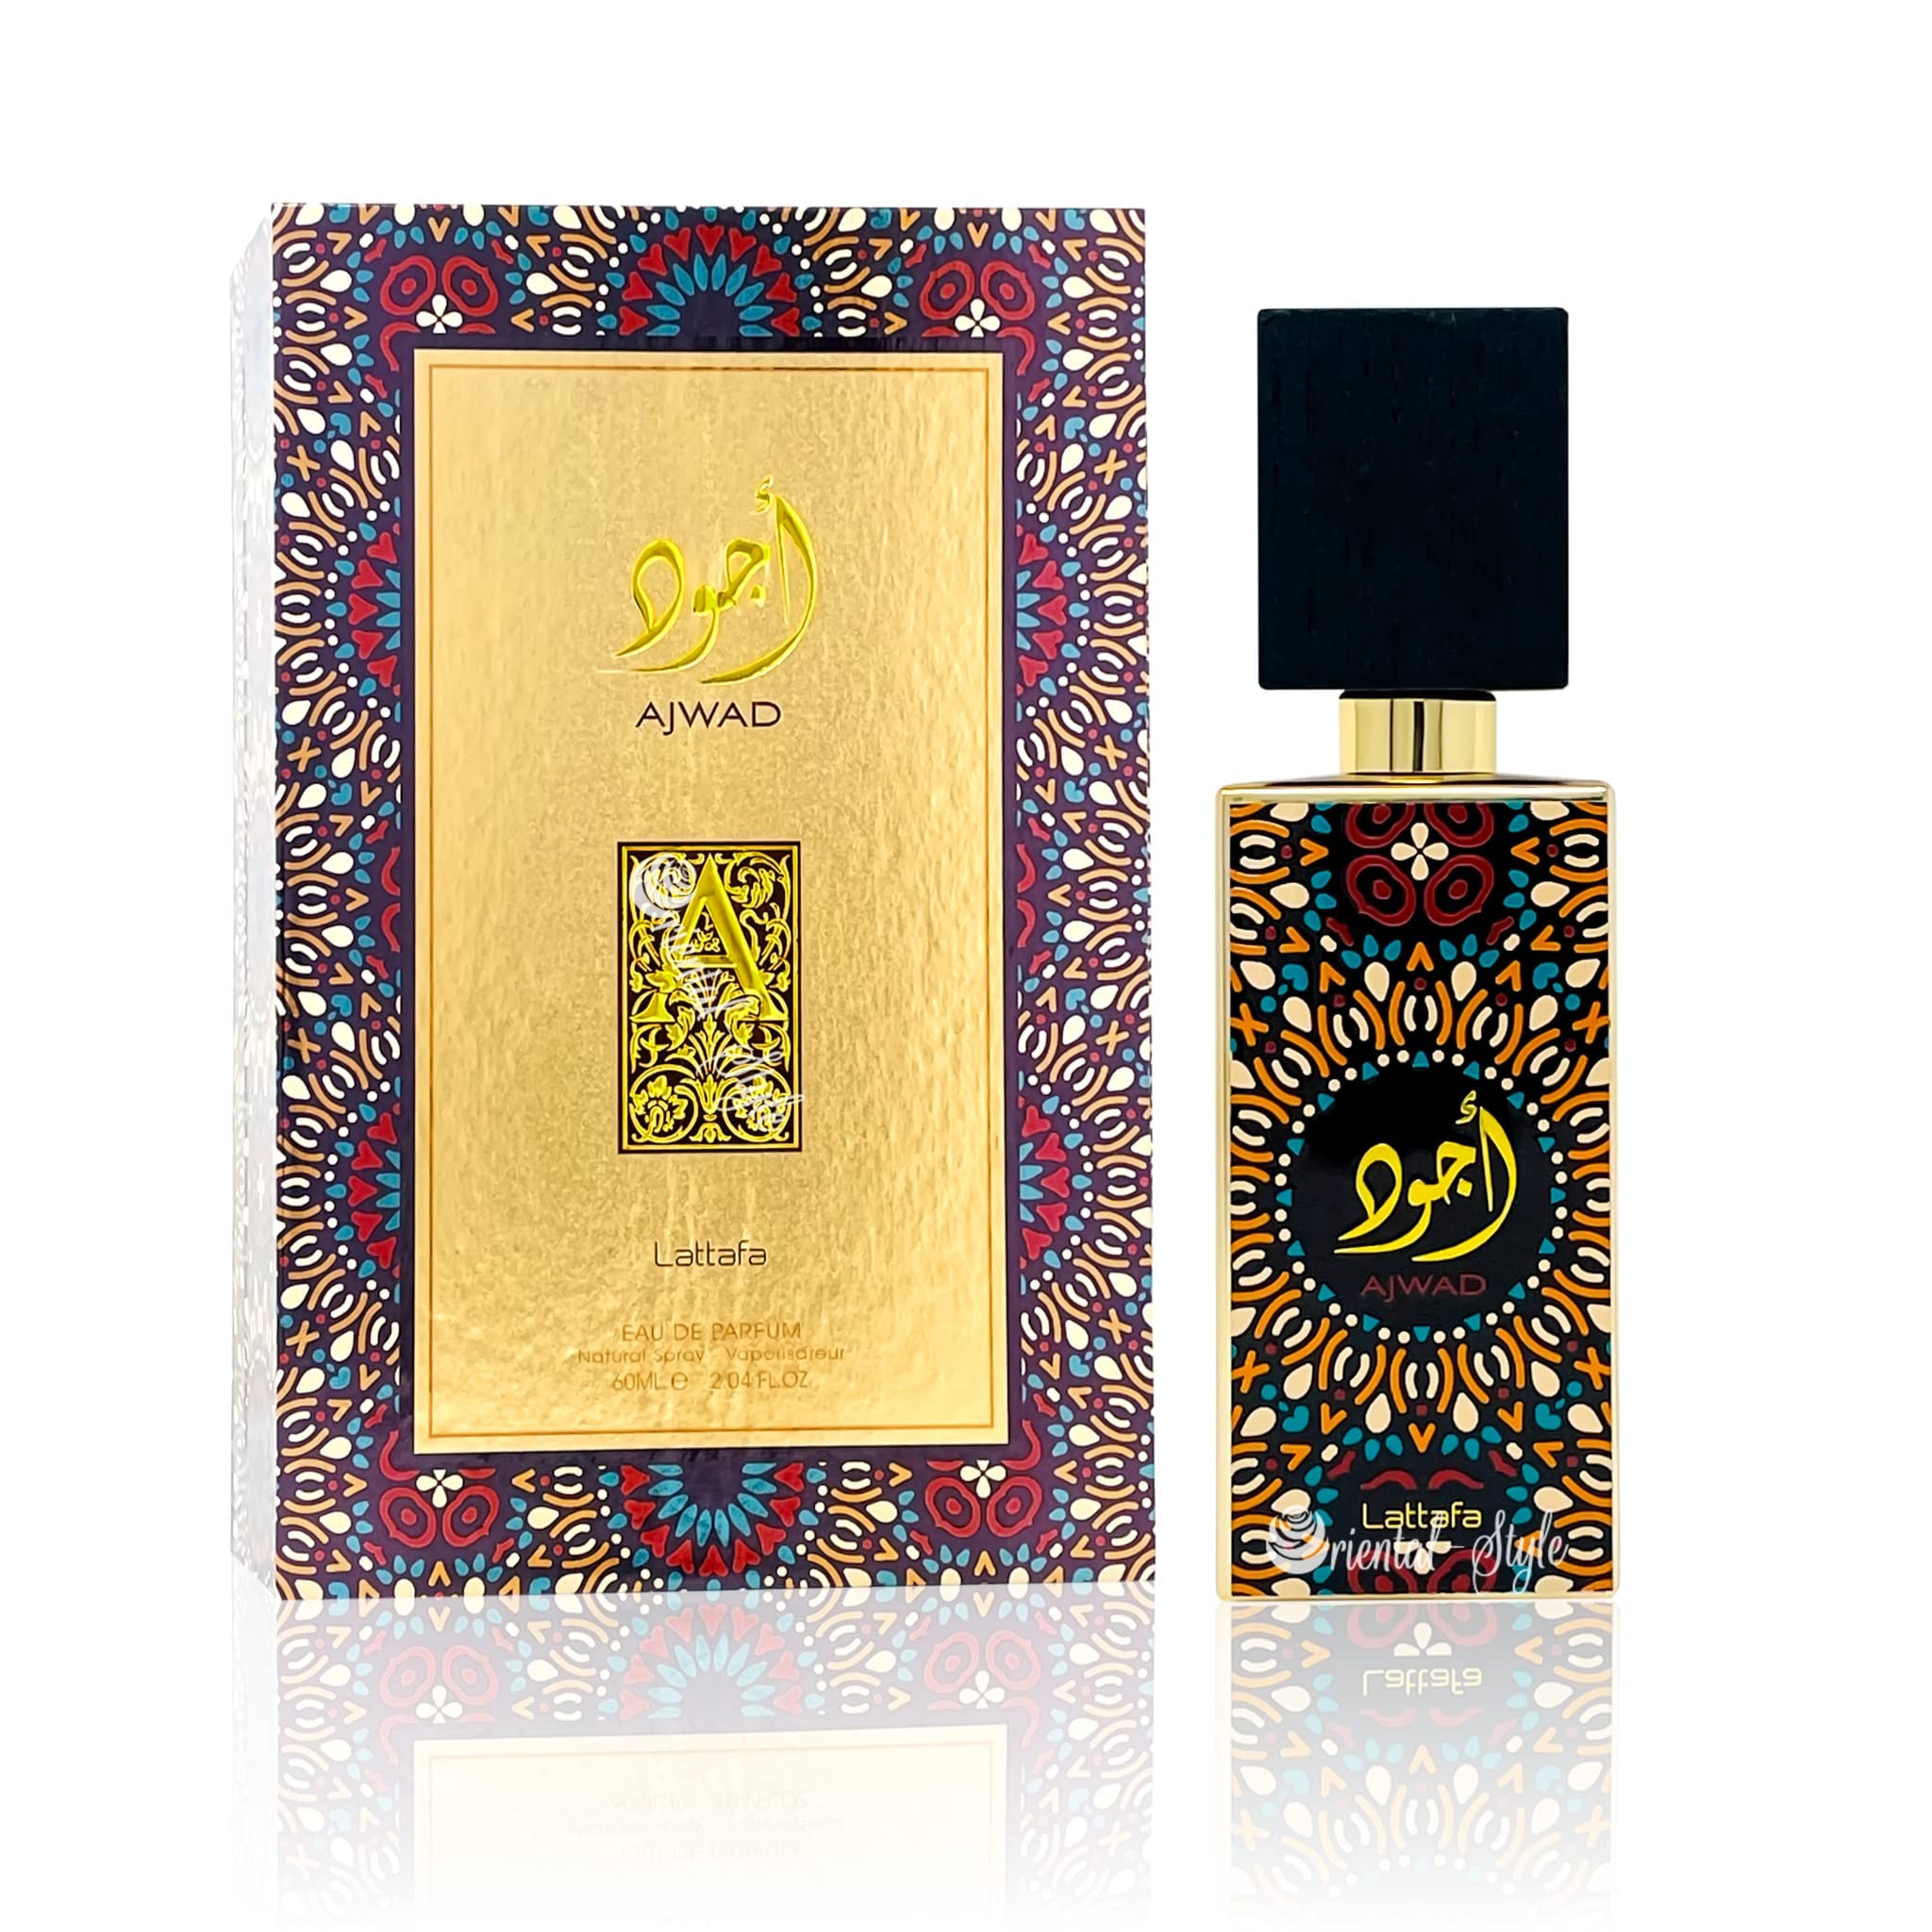 Ajwad EDP (60ml) spray perfume by Lattafa | Khan El Khalili